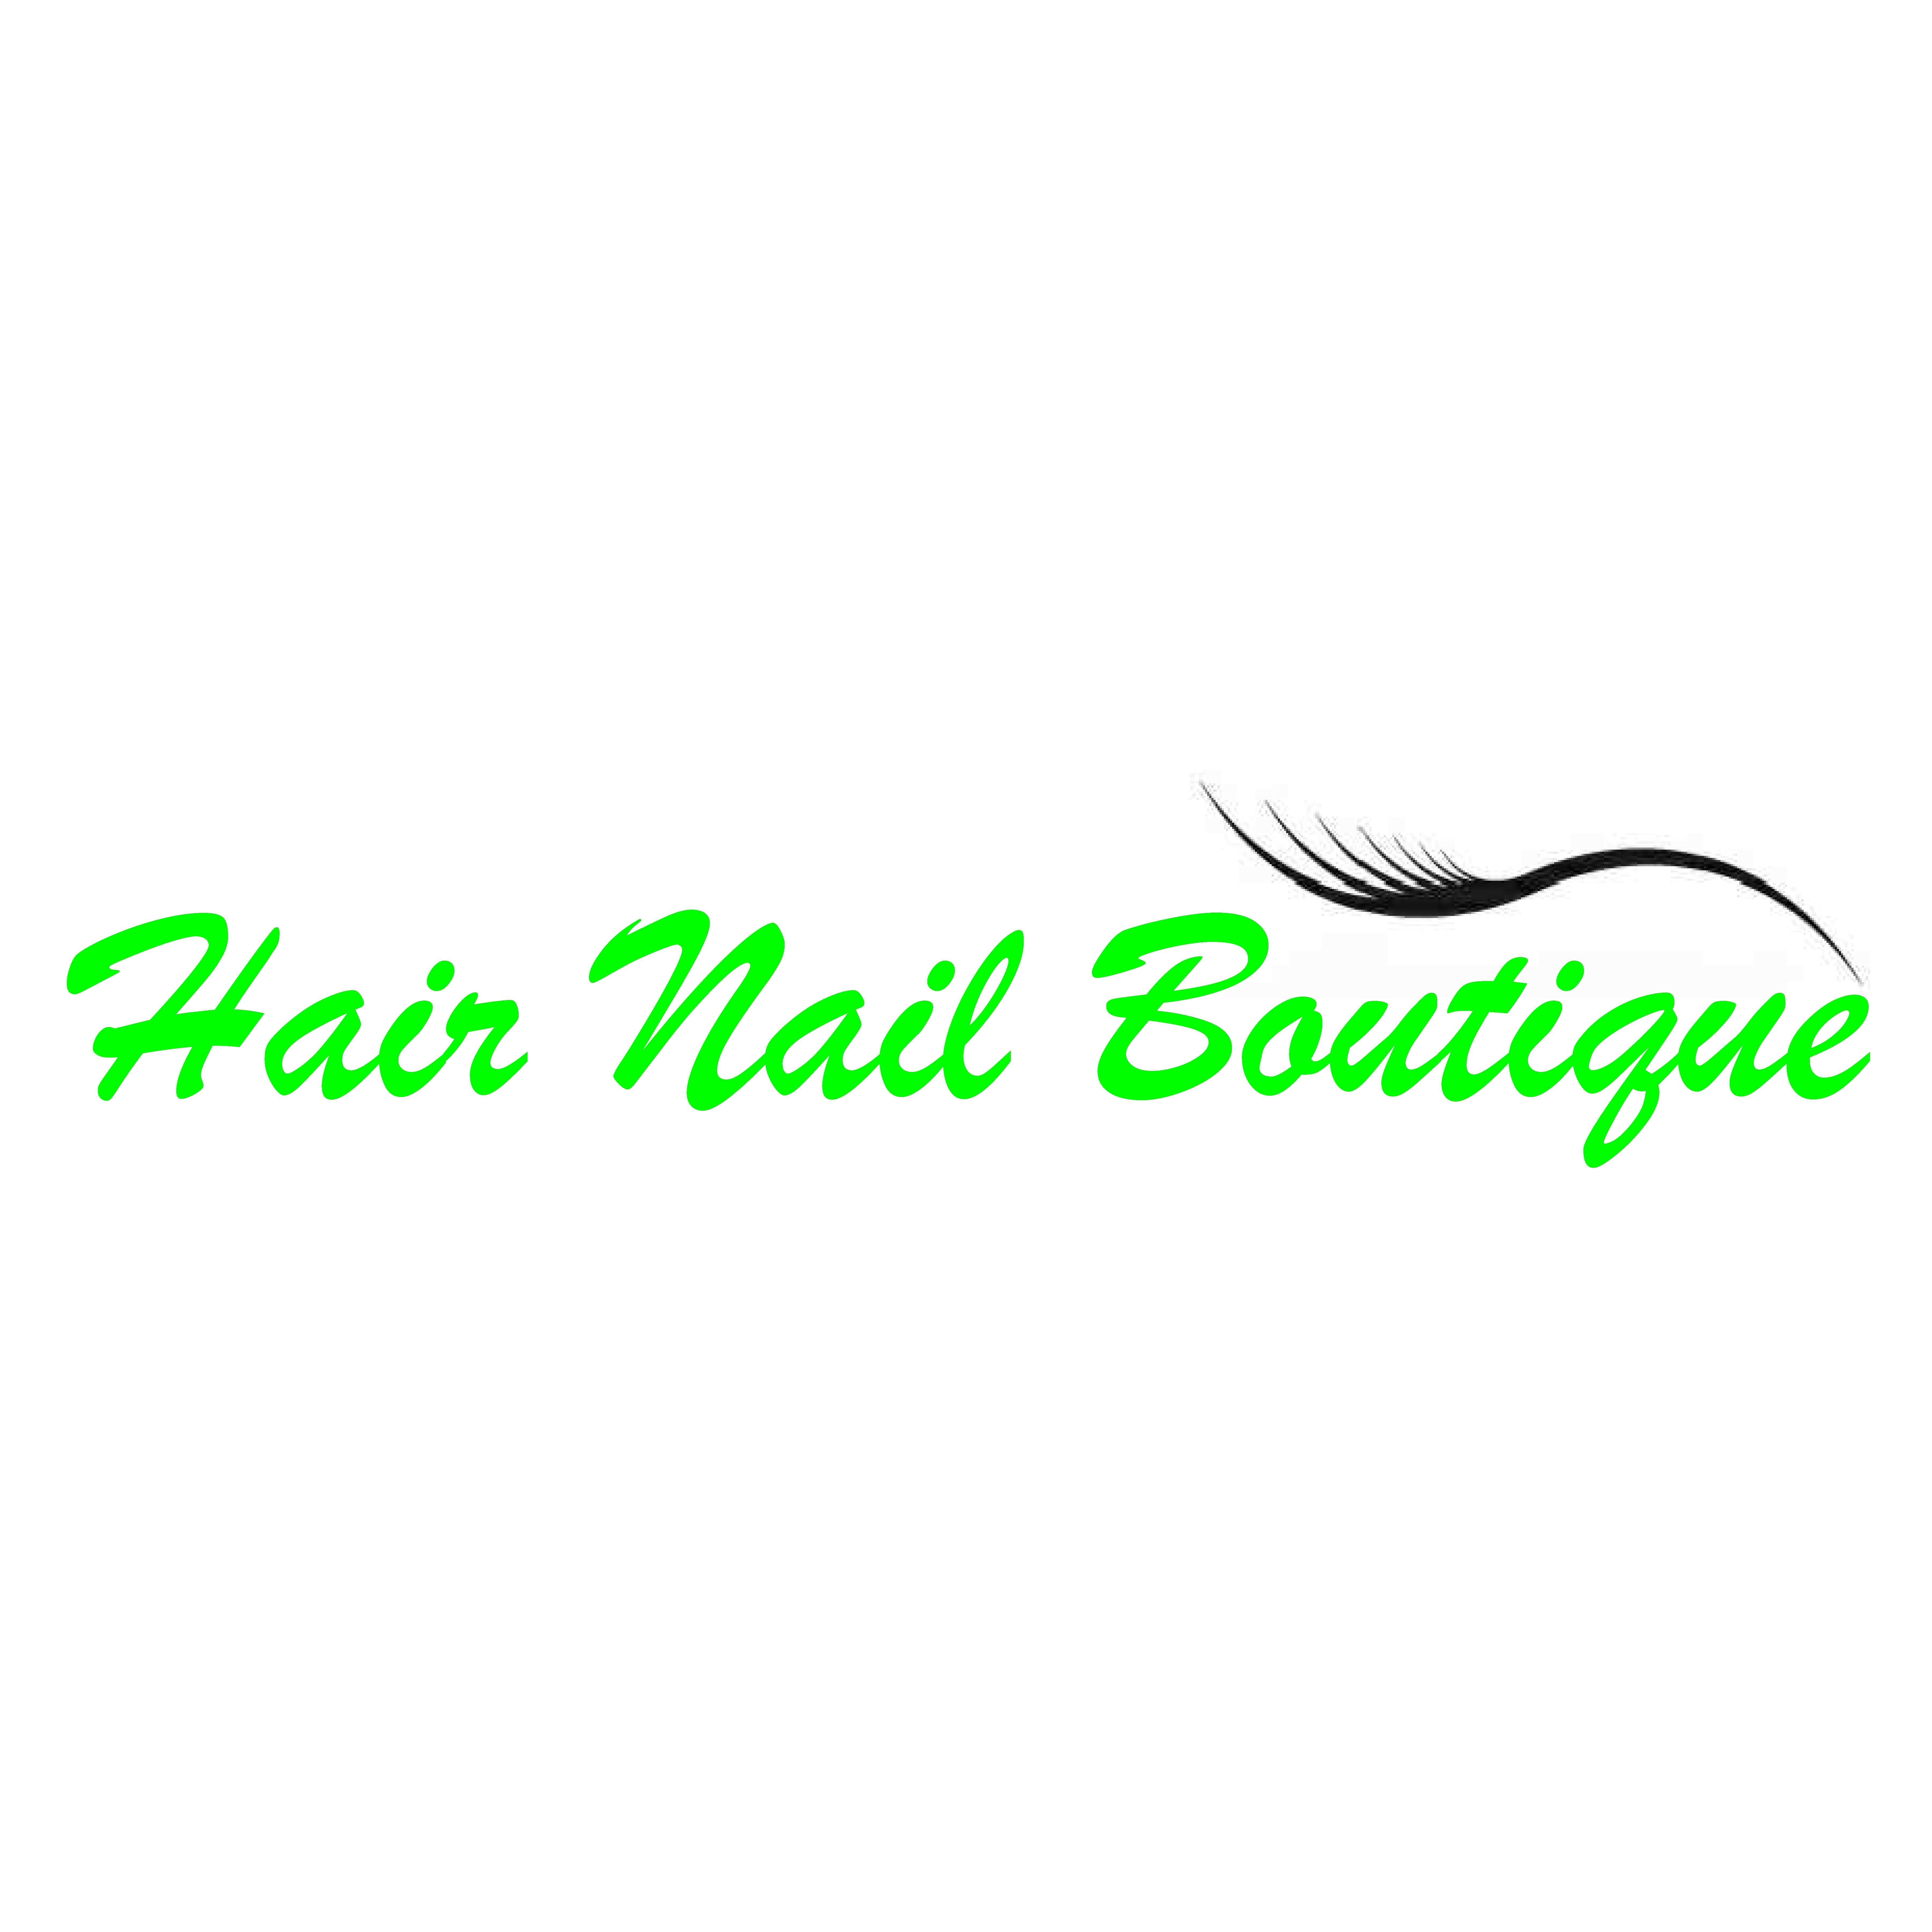 Hair Nail Boutique Logo